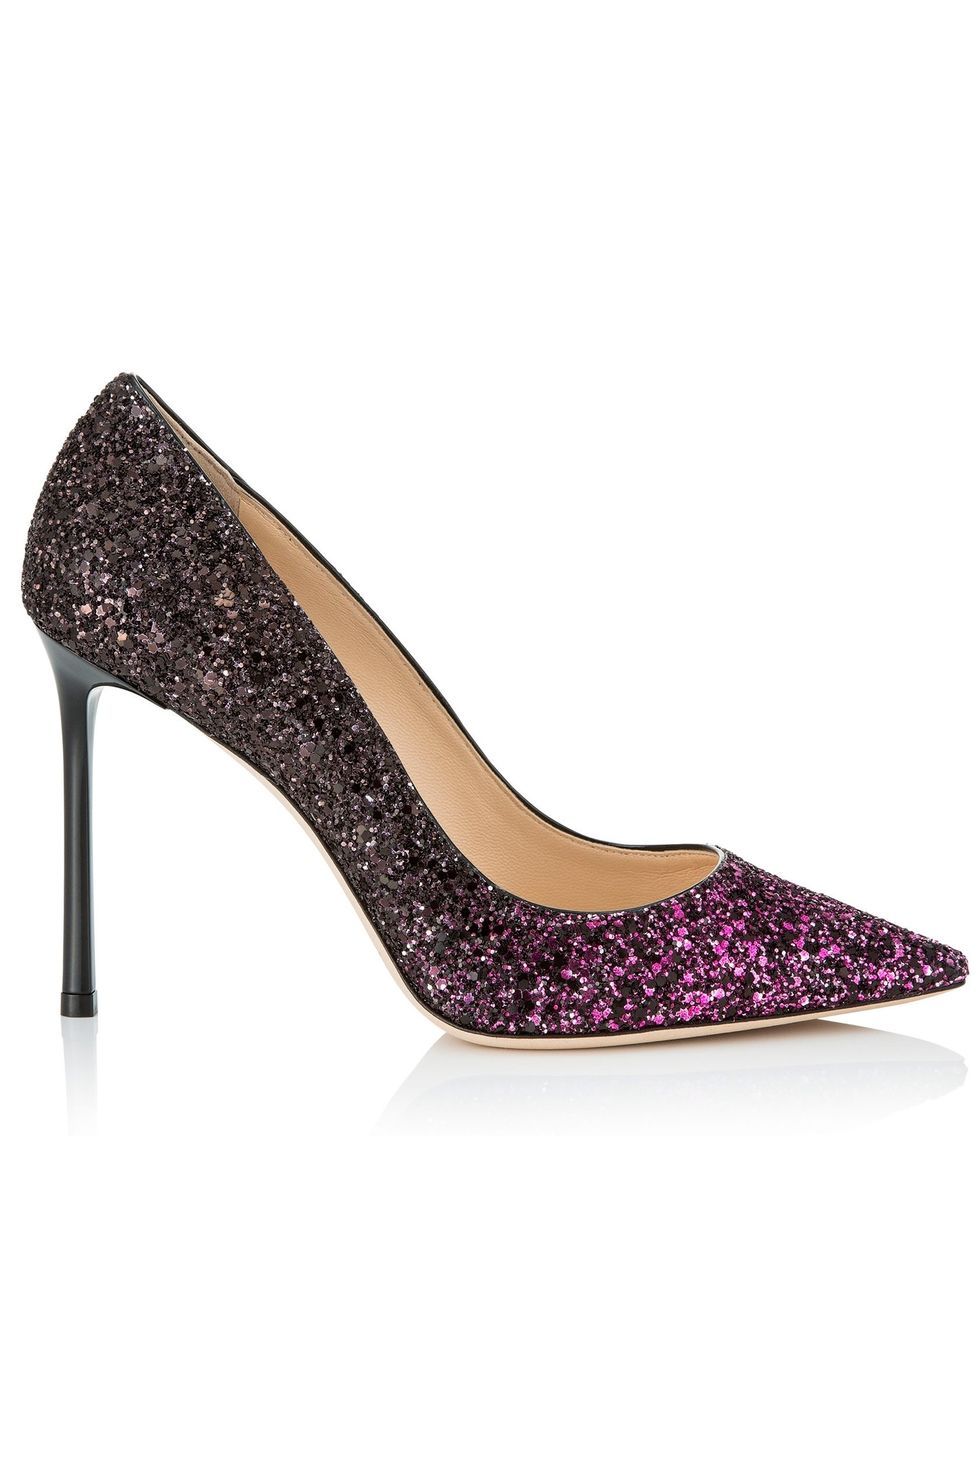 Footwear, High heels, Purple, Violet, Court shoe, Basic pump, Shoe, Glitter, Magenta, Slingback, 